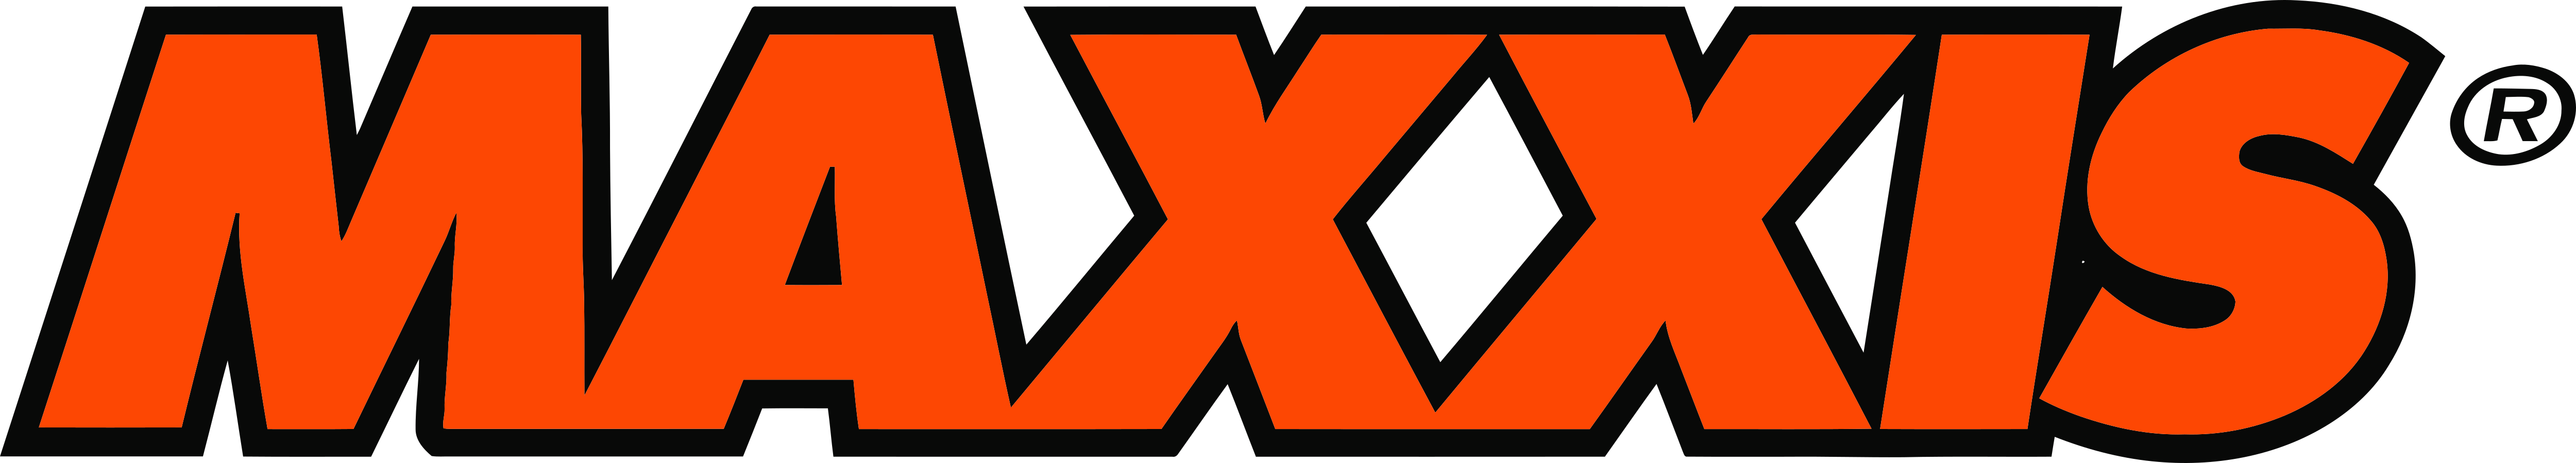 Maxxis – Logos Download